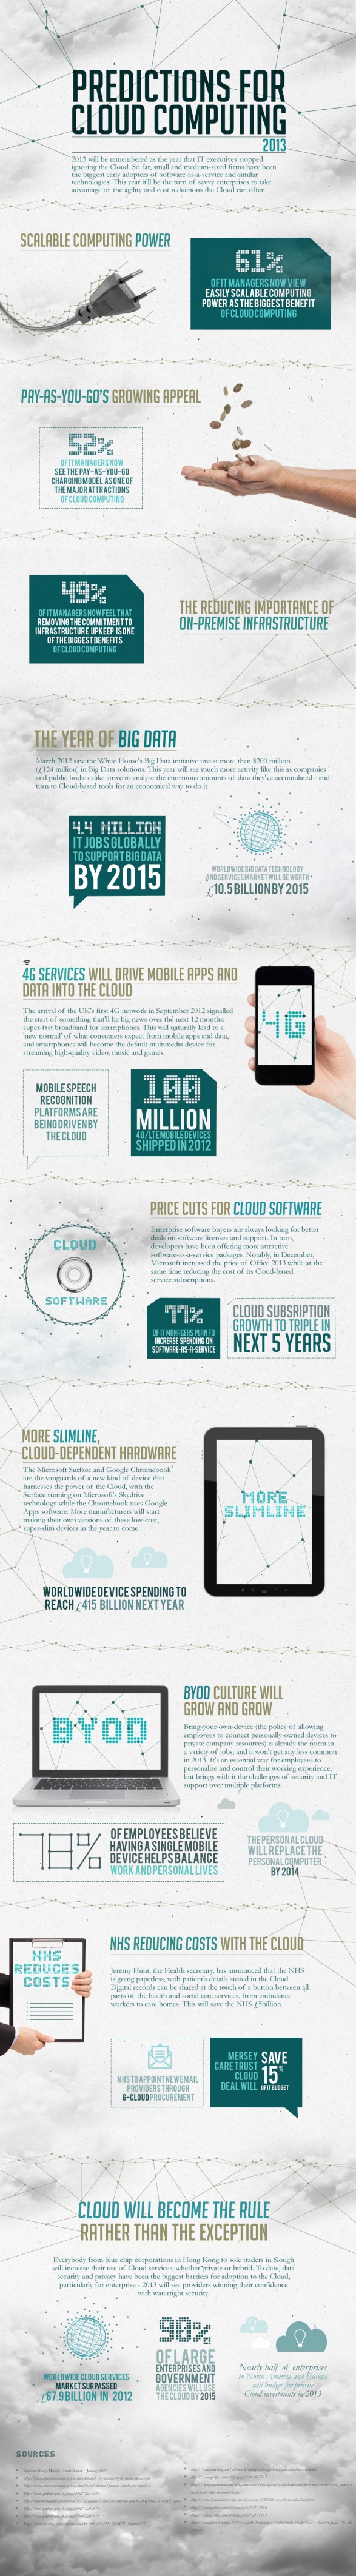 Cloud Computing Predictions for 2013